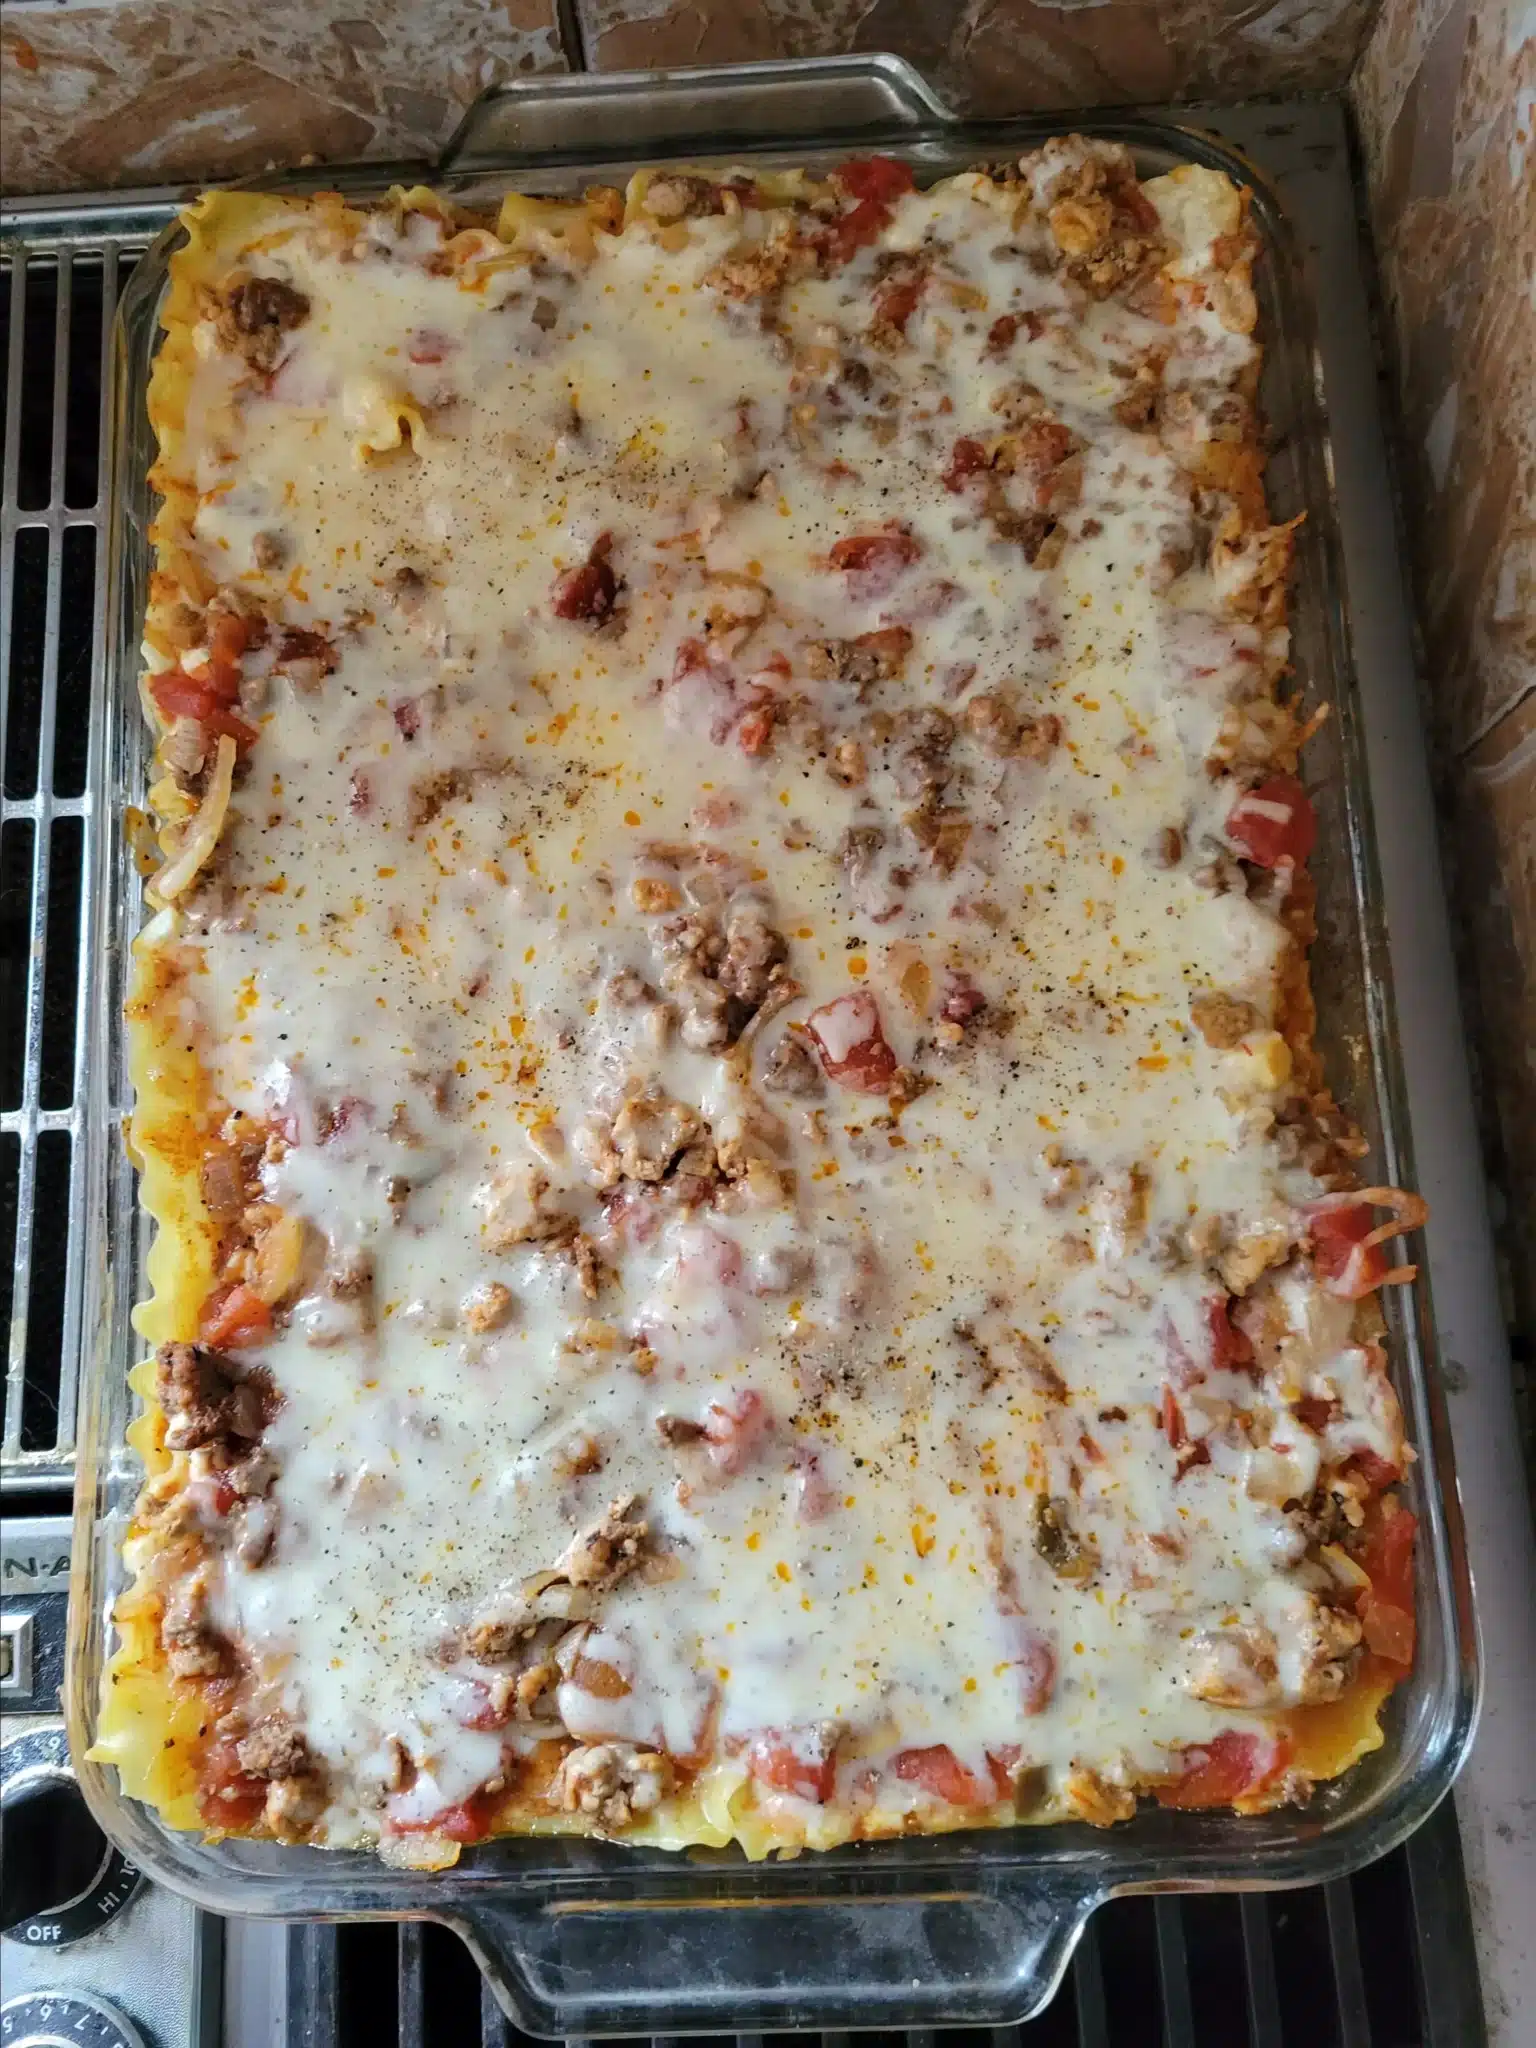 Homemade lasagna